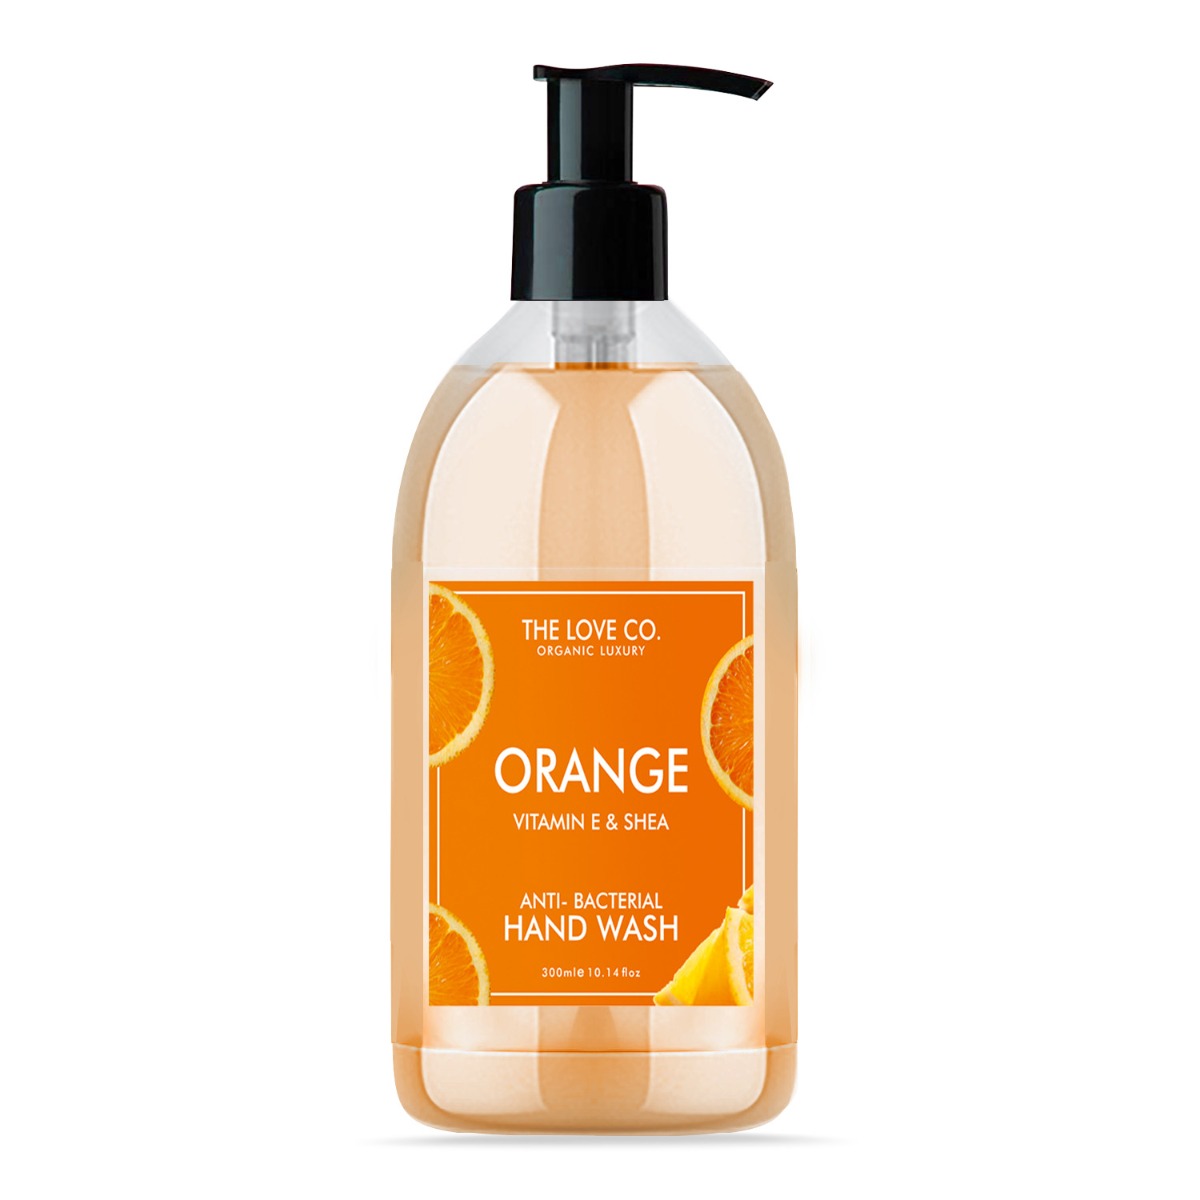 The Love Co. Orange Anti-Bacterial Hand Wash, 300ml